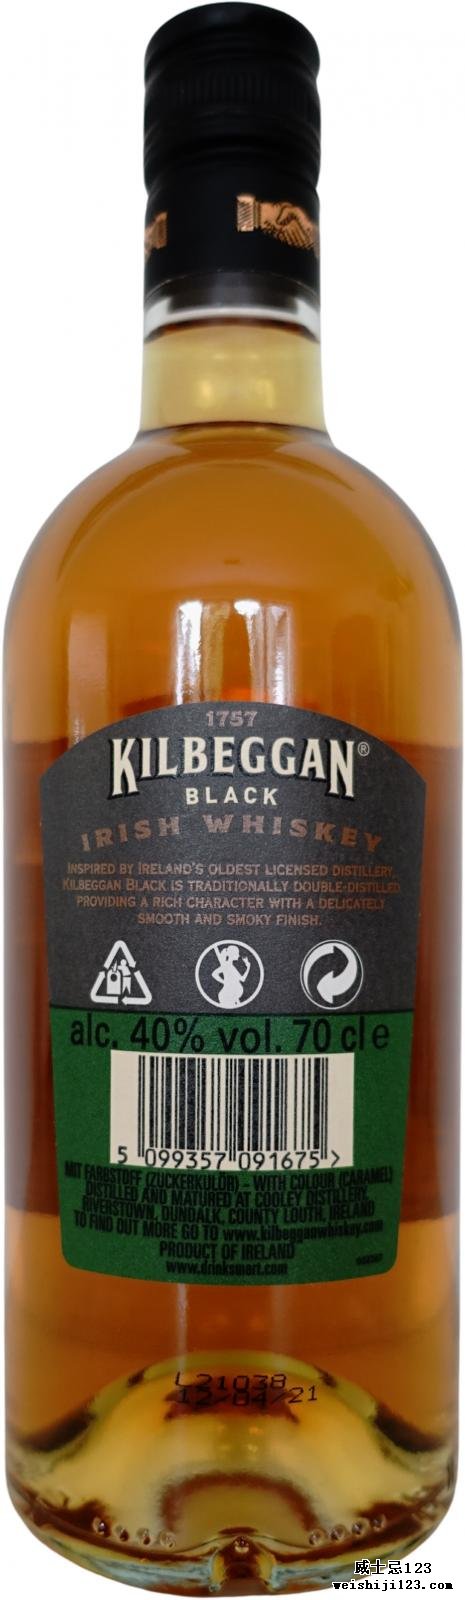 Kilbeggan Black